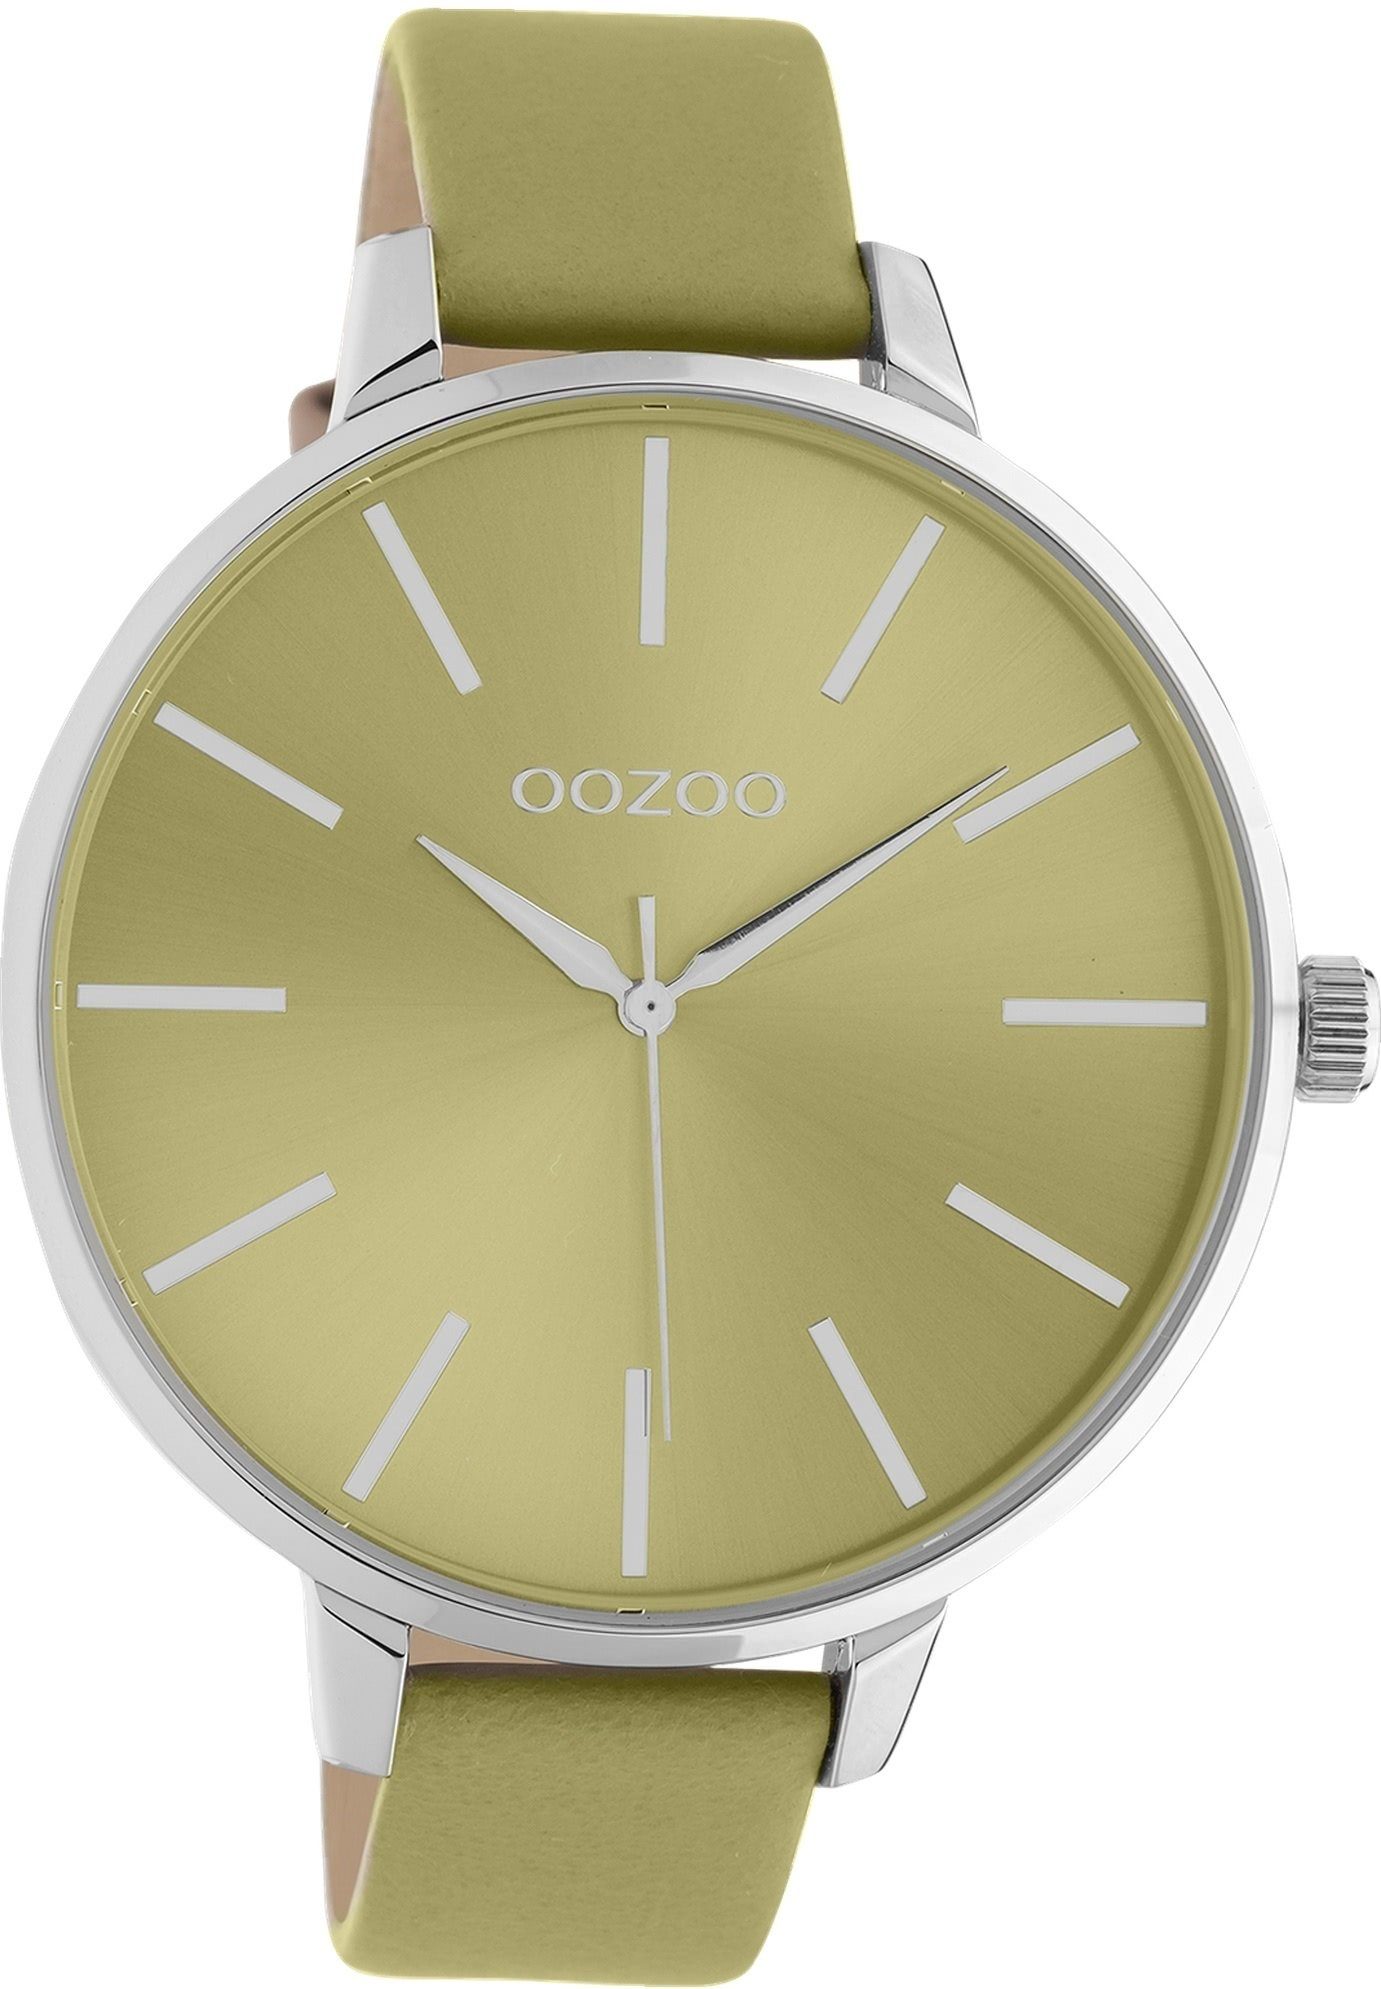 OOZOO Quarzuhr Oozoo Fashion-Style Armbanduhr Lederarmband, 48mm) rund, (ca. Timepieces, Damen groß extra Damenuhr